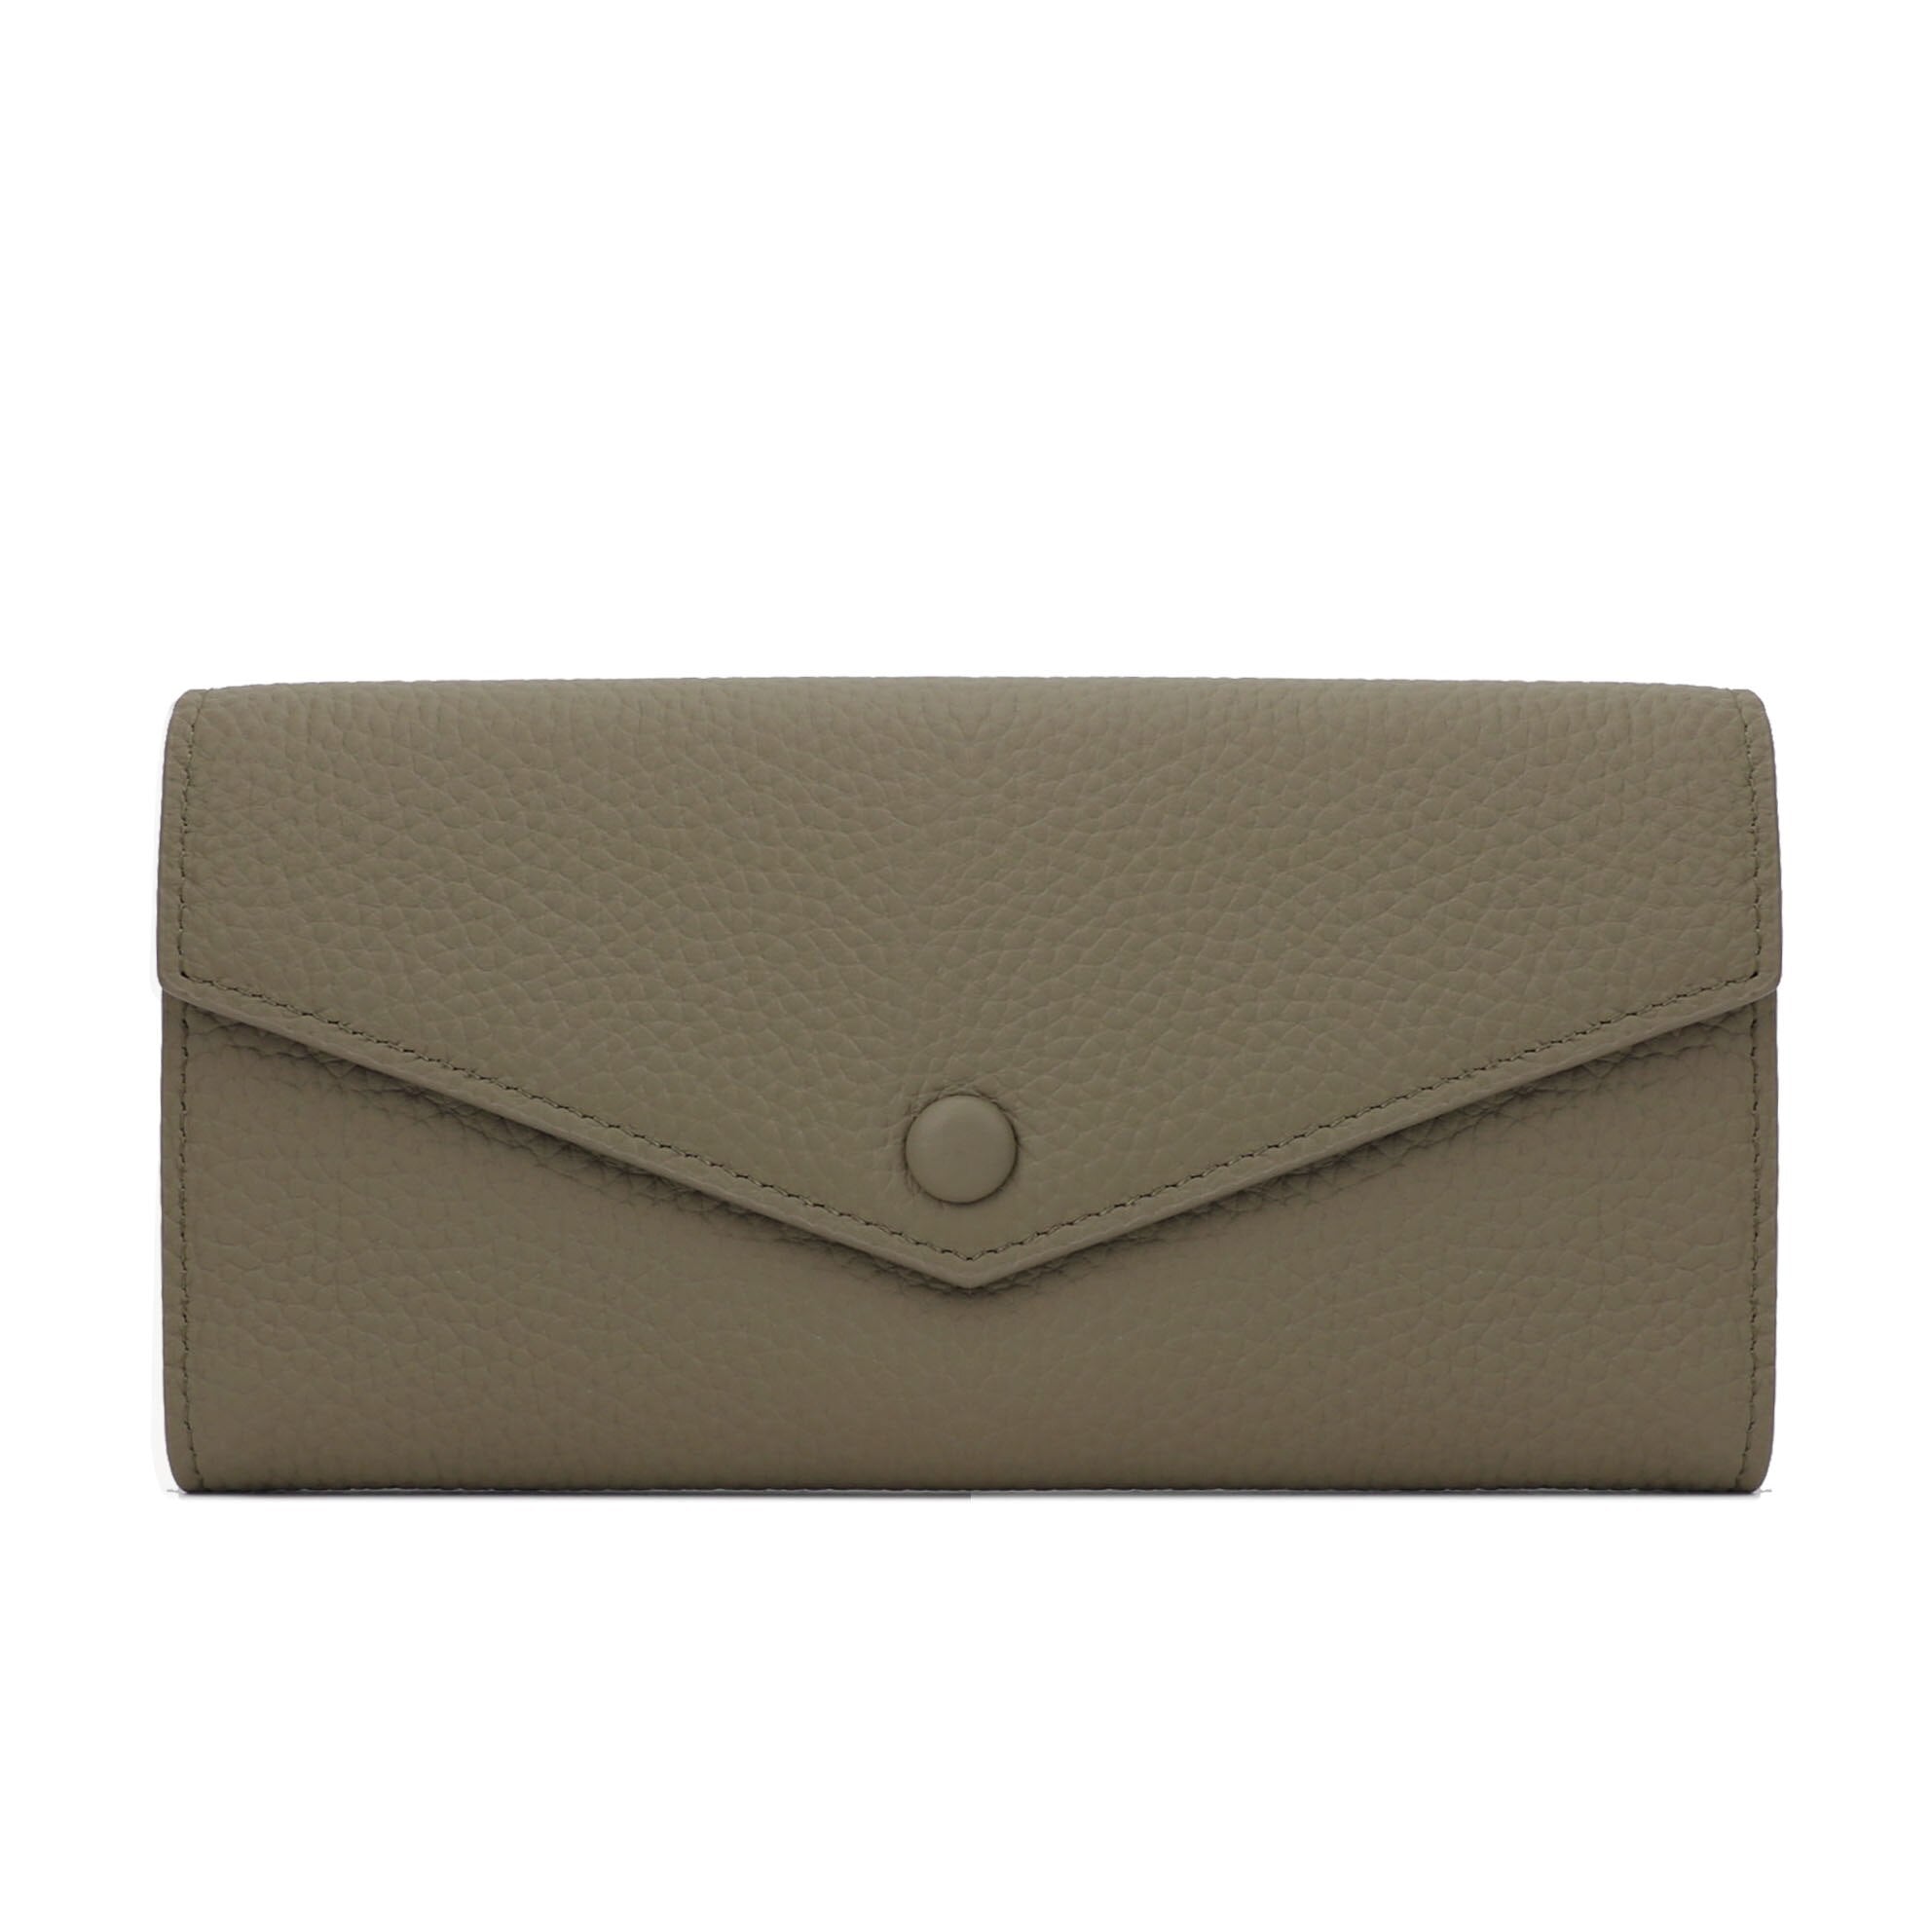 Mini Pouchette Handbags Tote Bag Top Quality Epsom Leather Gold Hardware  Detachable Chain Solid Color Handbag Purse Women Crossbody Bags Clutch  Wallets From Fashionshop889, $92.17 | DHgate.Com